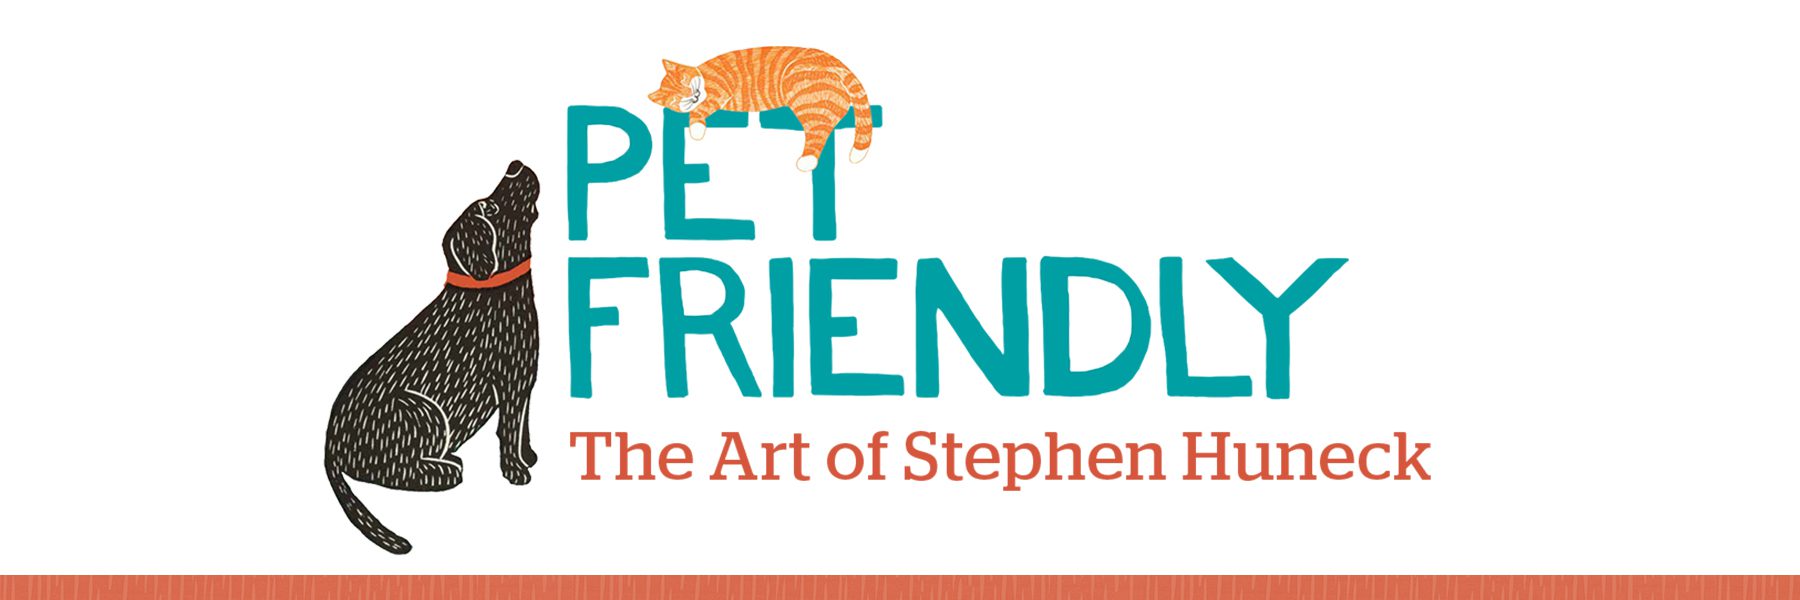 Online Exhibition "Pet Friendly: The Art of Stephen Huneck"